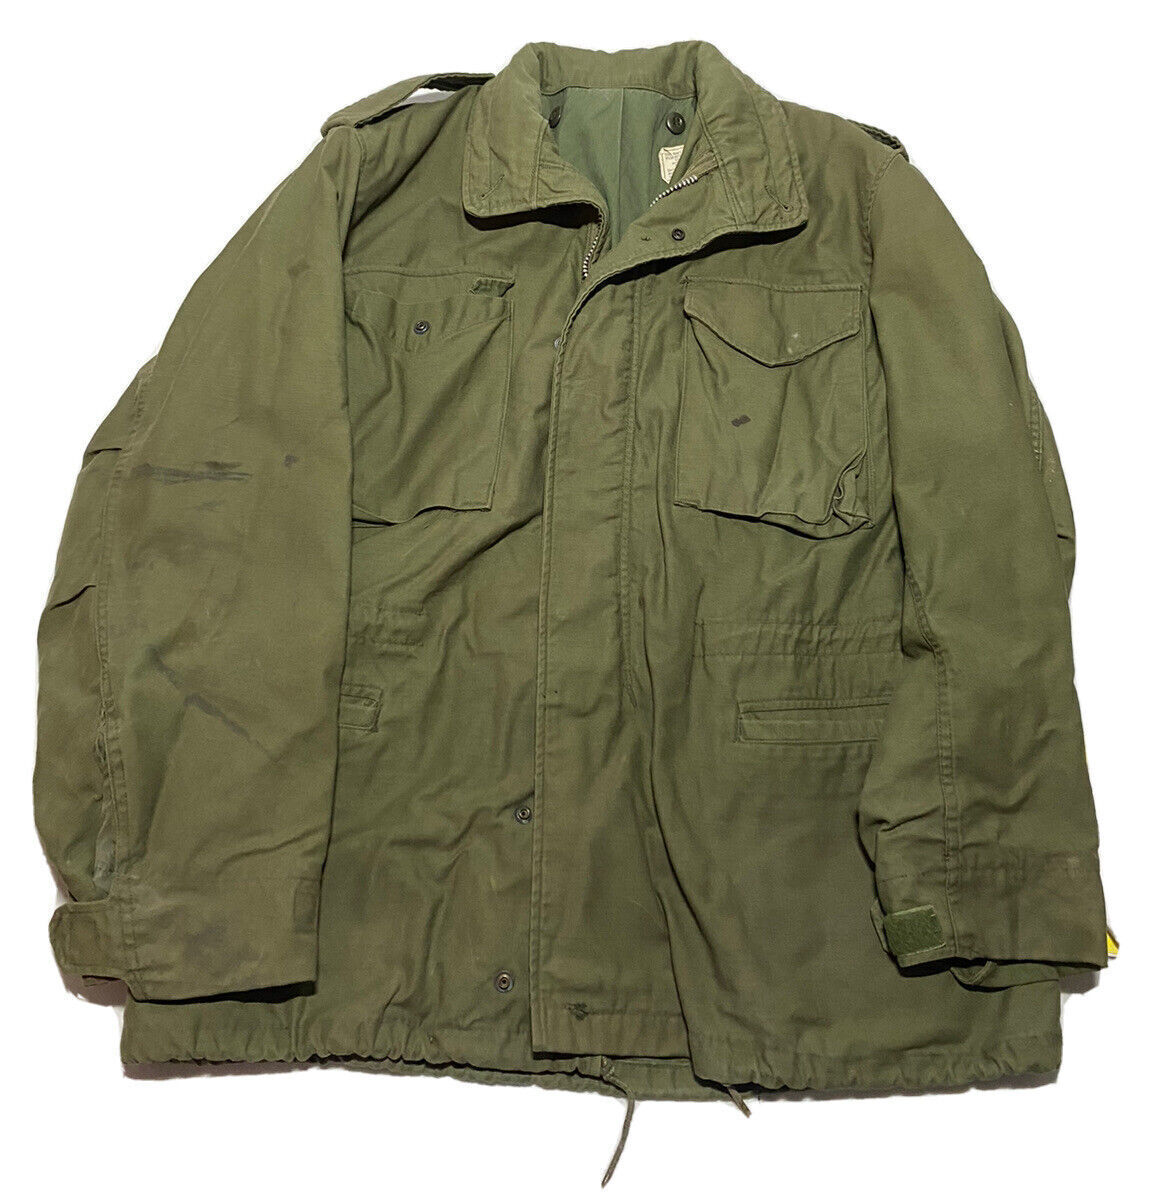 Vintage Vietnam War Field Jacket m65 Coat cold Weather 70s Medium Regular Q6